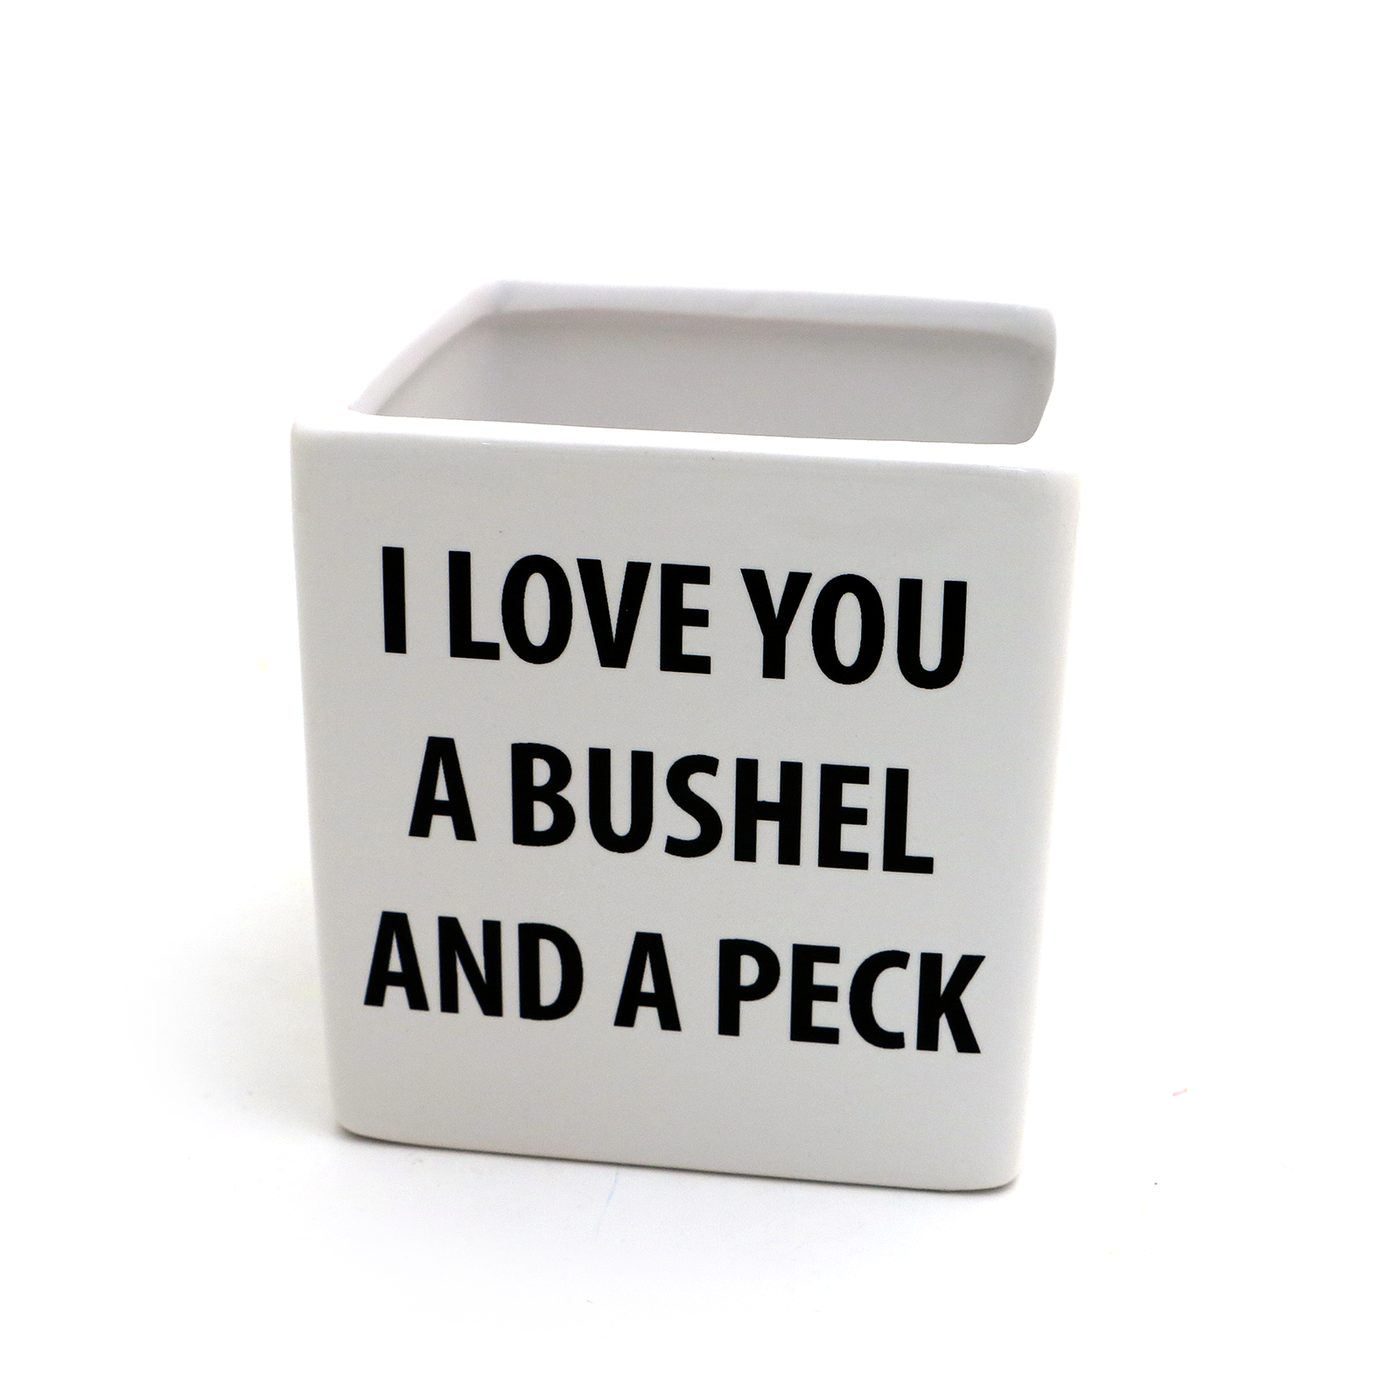 Bushel and a Peck Planter/Pen Container